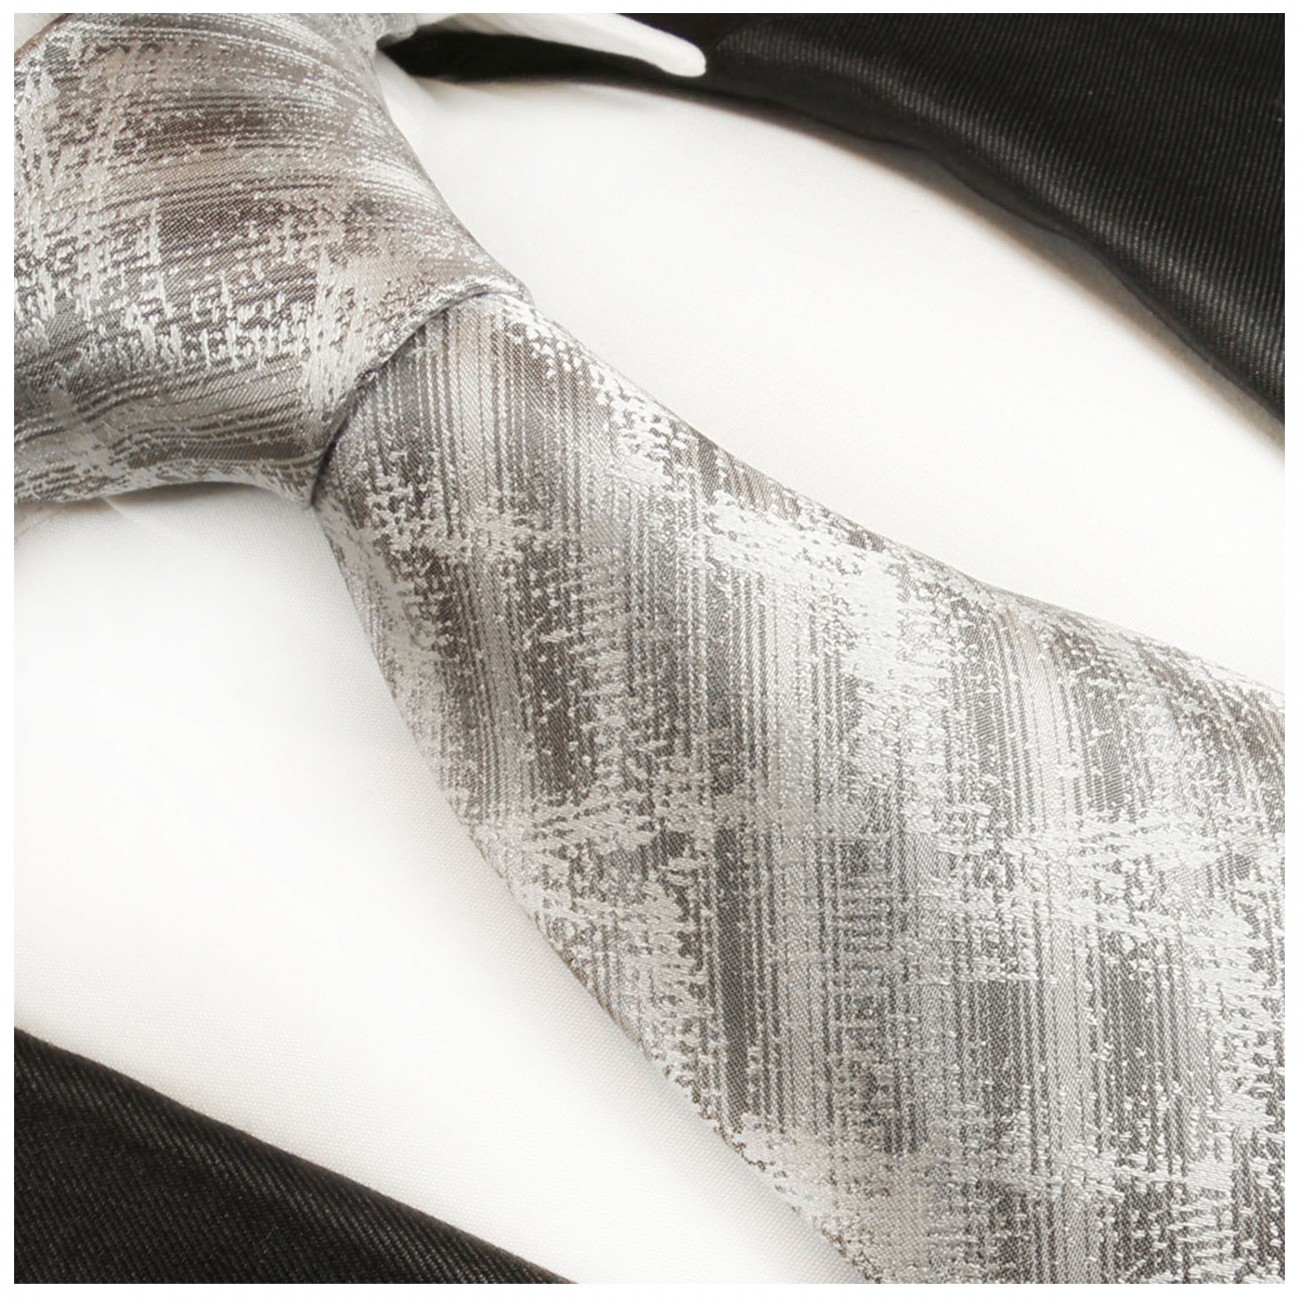 Krawatte weiß grau gestreift Seide